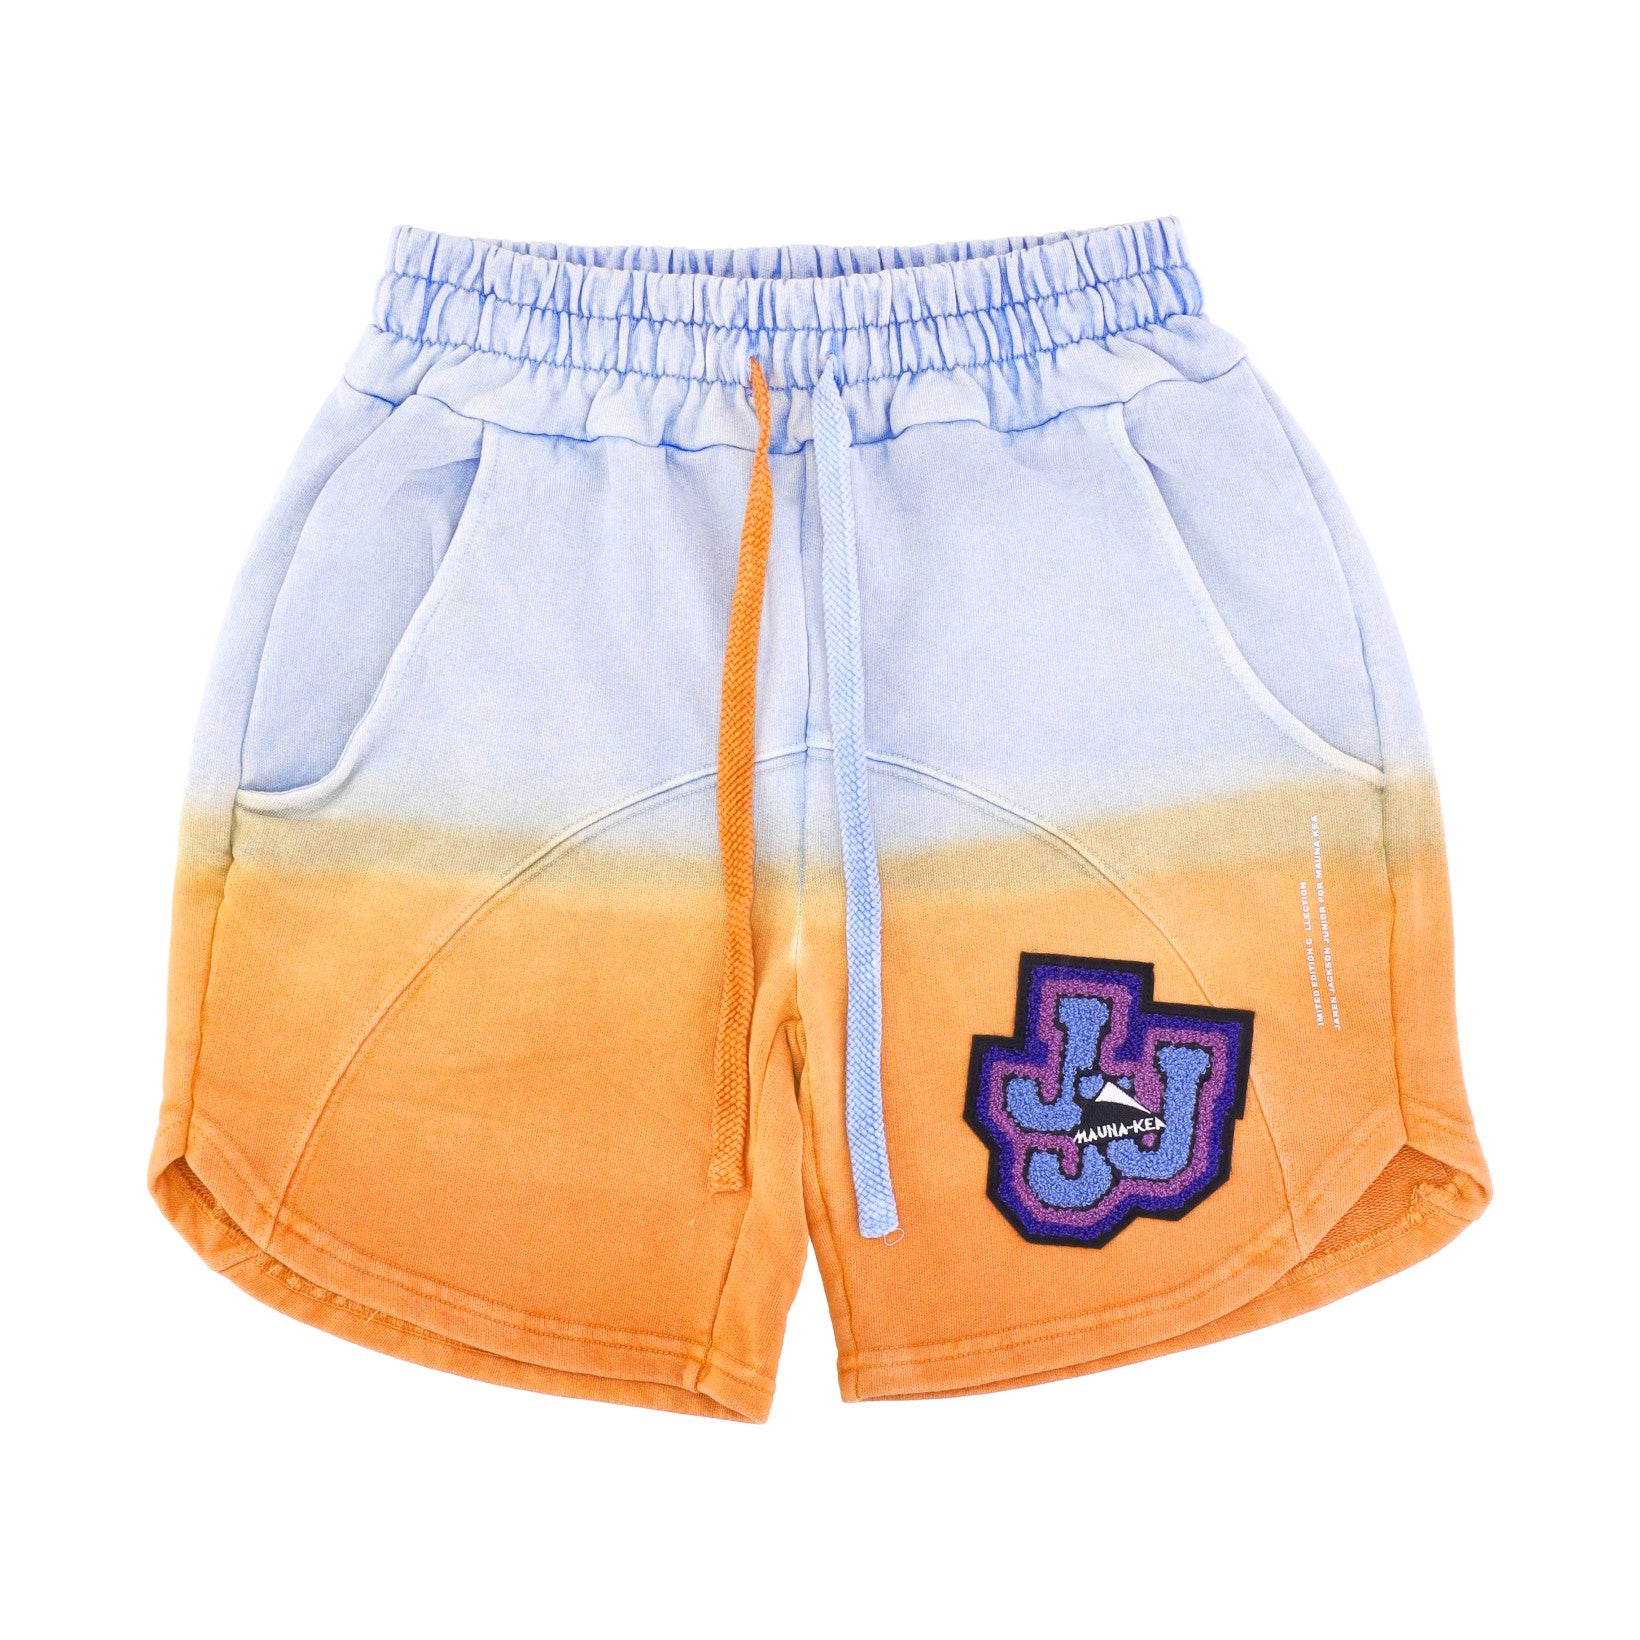 Mauna-kea, Pantalone Corto Tuta Uomo Degrade' Short Pants X Triple J, Cyan/orange